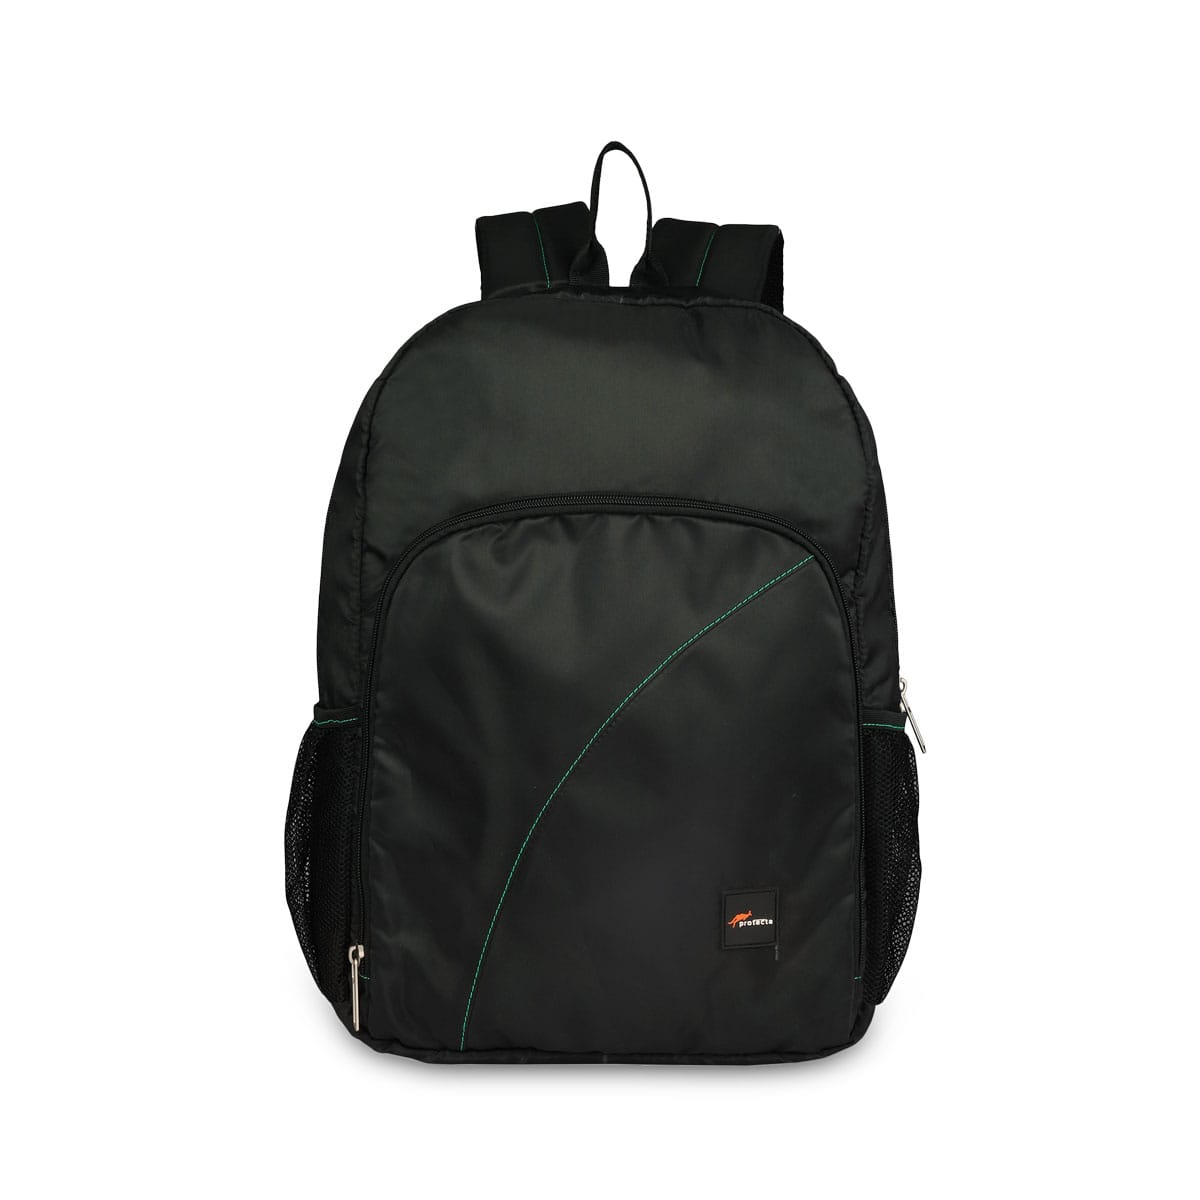 Black-Green | Protecta Atom Laptop Backpack-Main